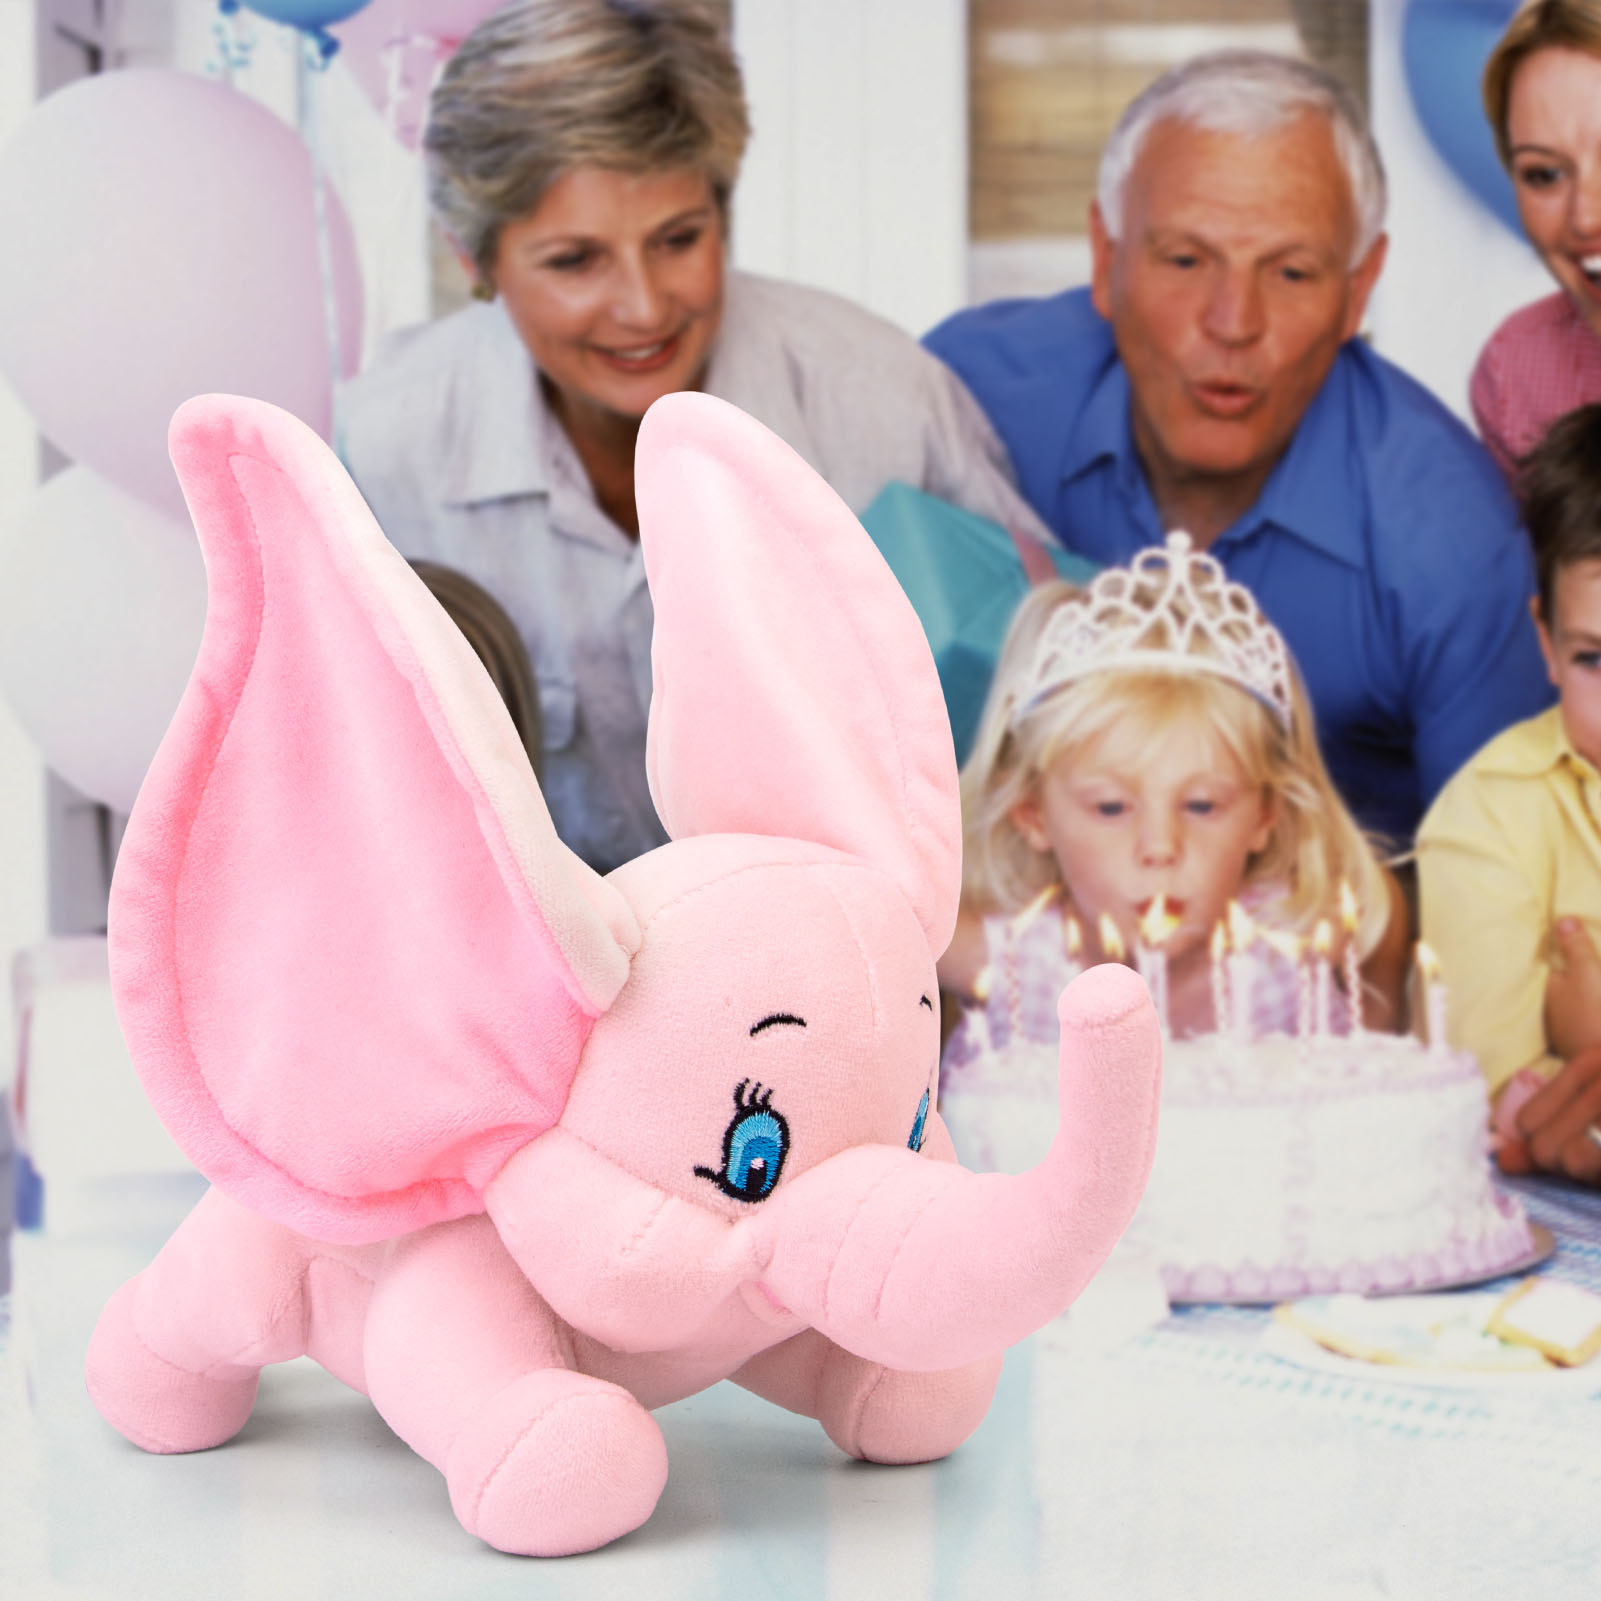 Toyard hot pink elephant stuffed animal canadian stuffed animal company